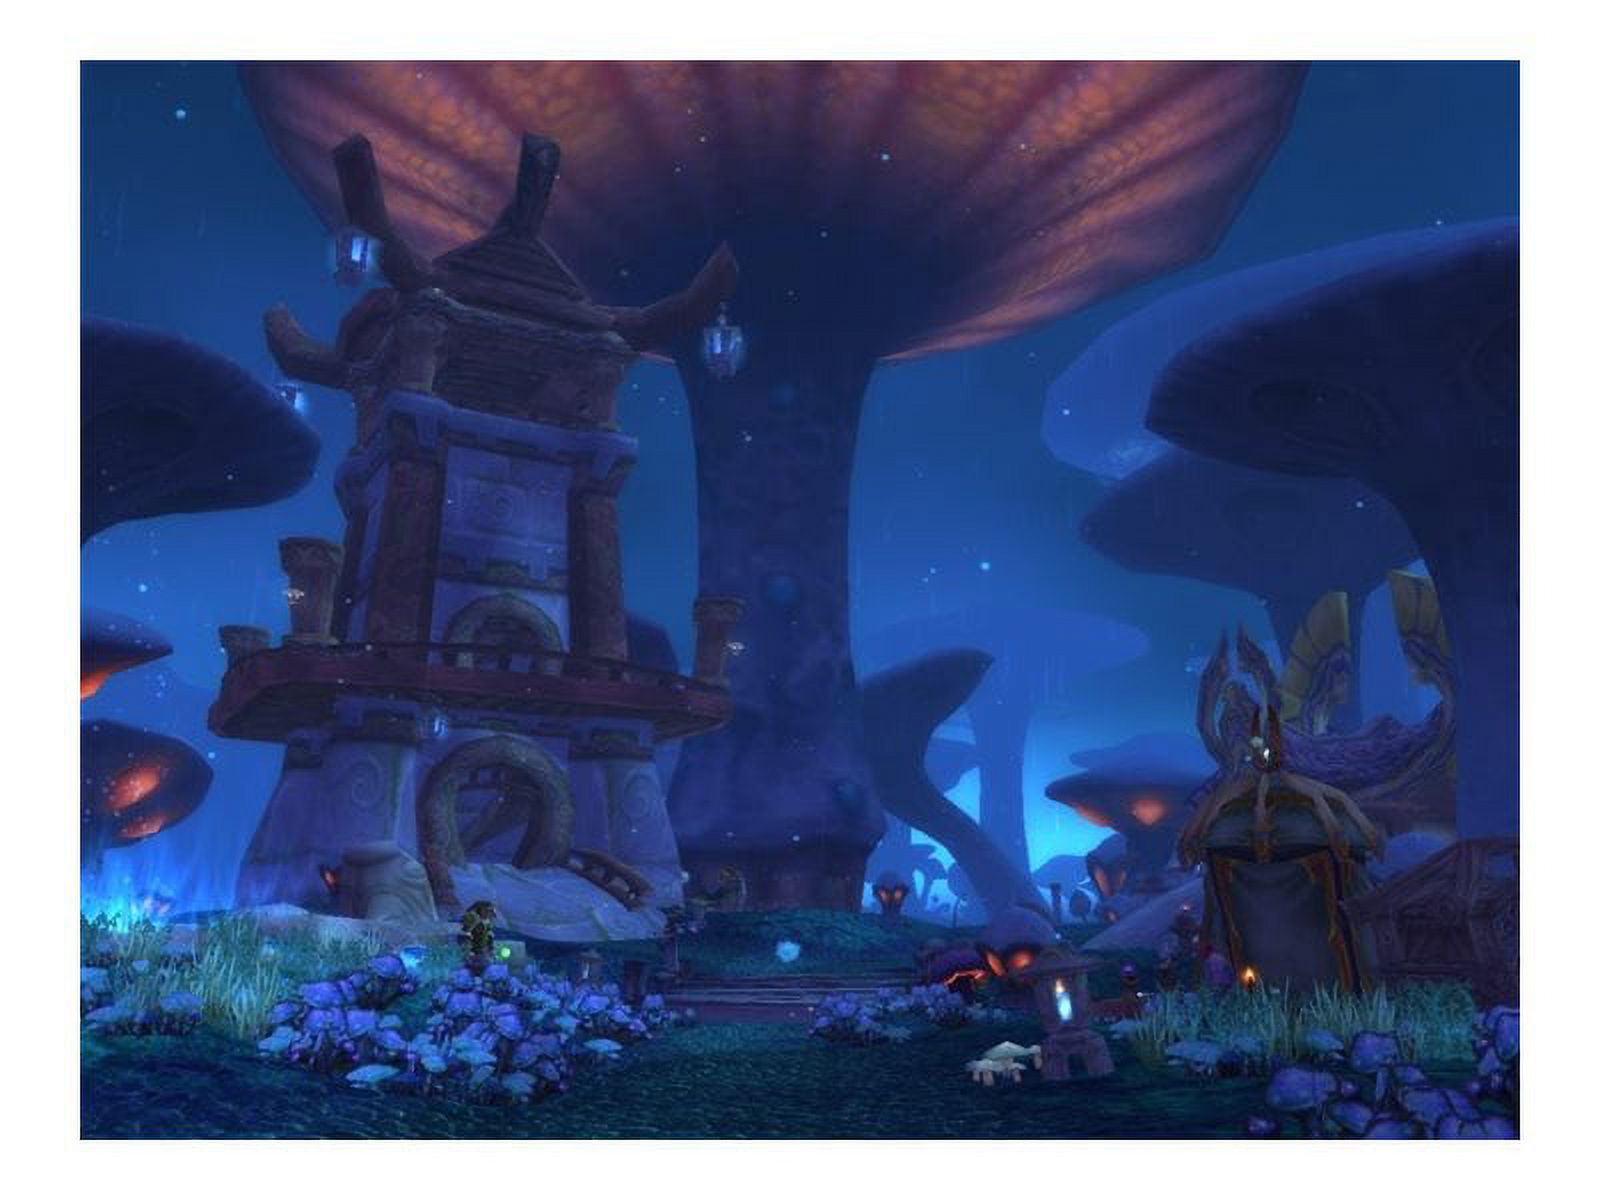 World of Warcraft: Mists of Pandaria - image 5 of 15